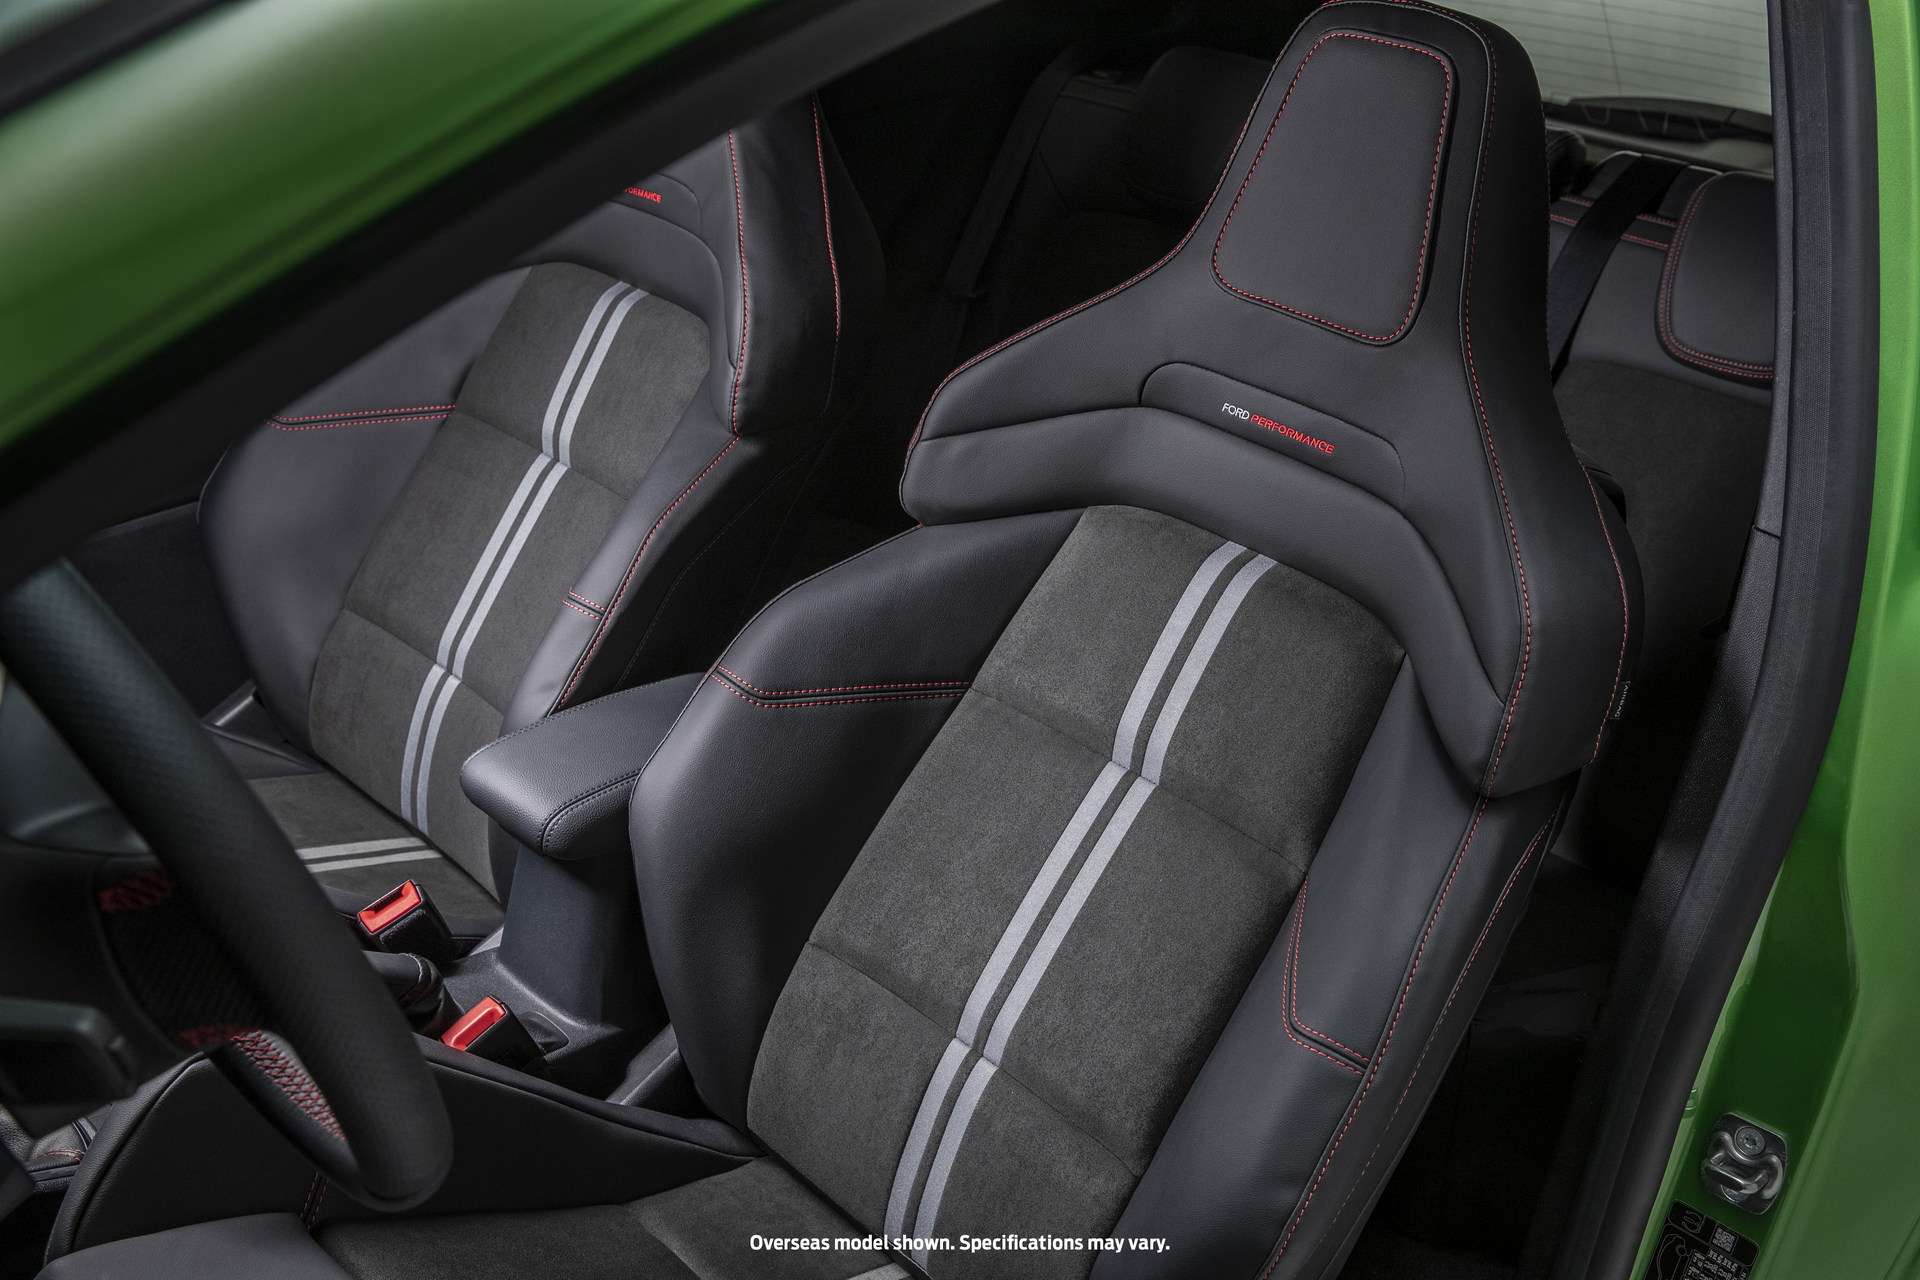 2022-Ford-Fiesta-ST-interior-10.jpg